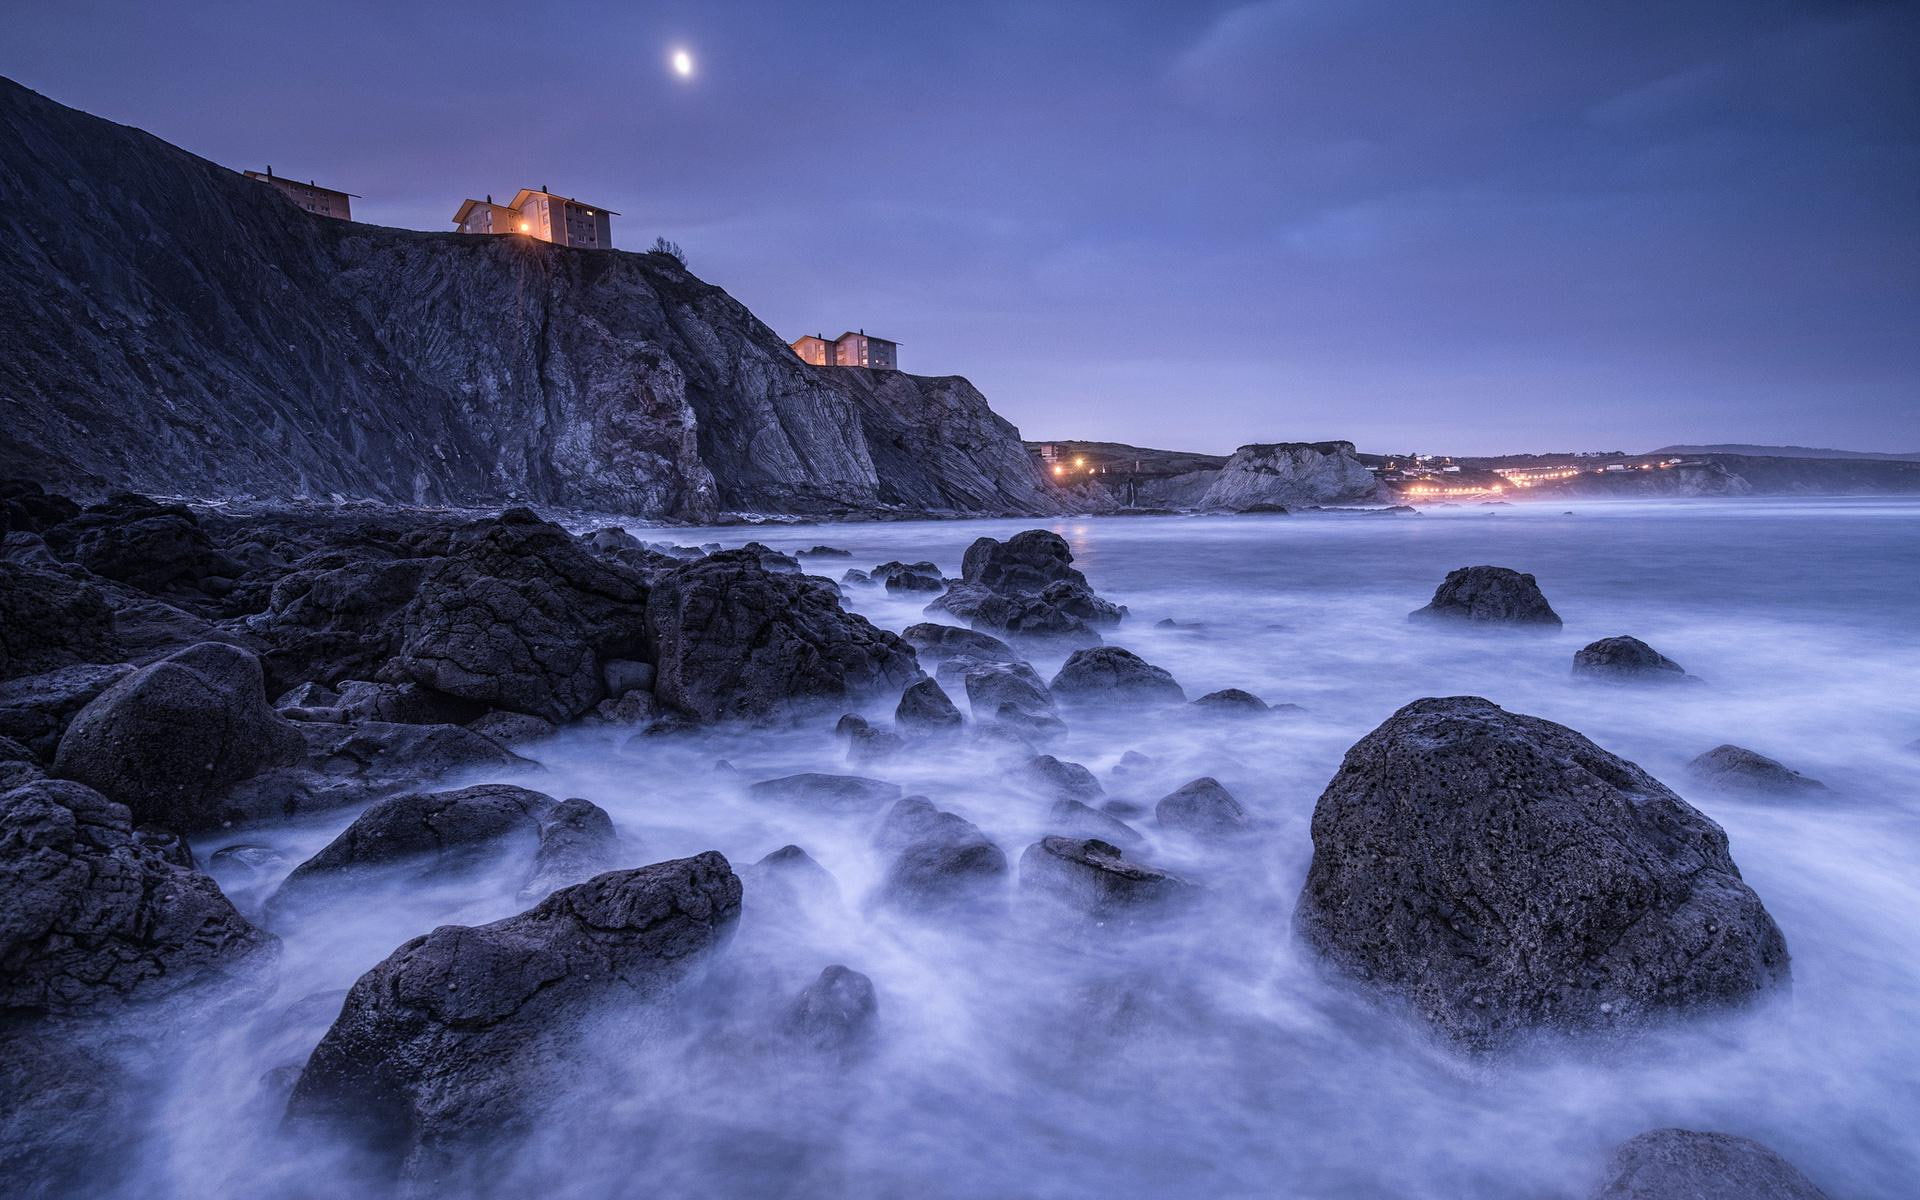 Spain Bay Biscay Beach Stones Rocks Houses Lights Lighting Night Moon Blue Sky Image Gallery